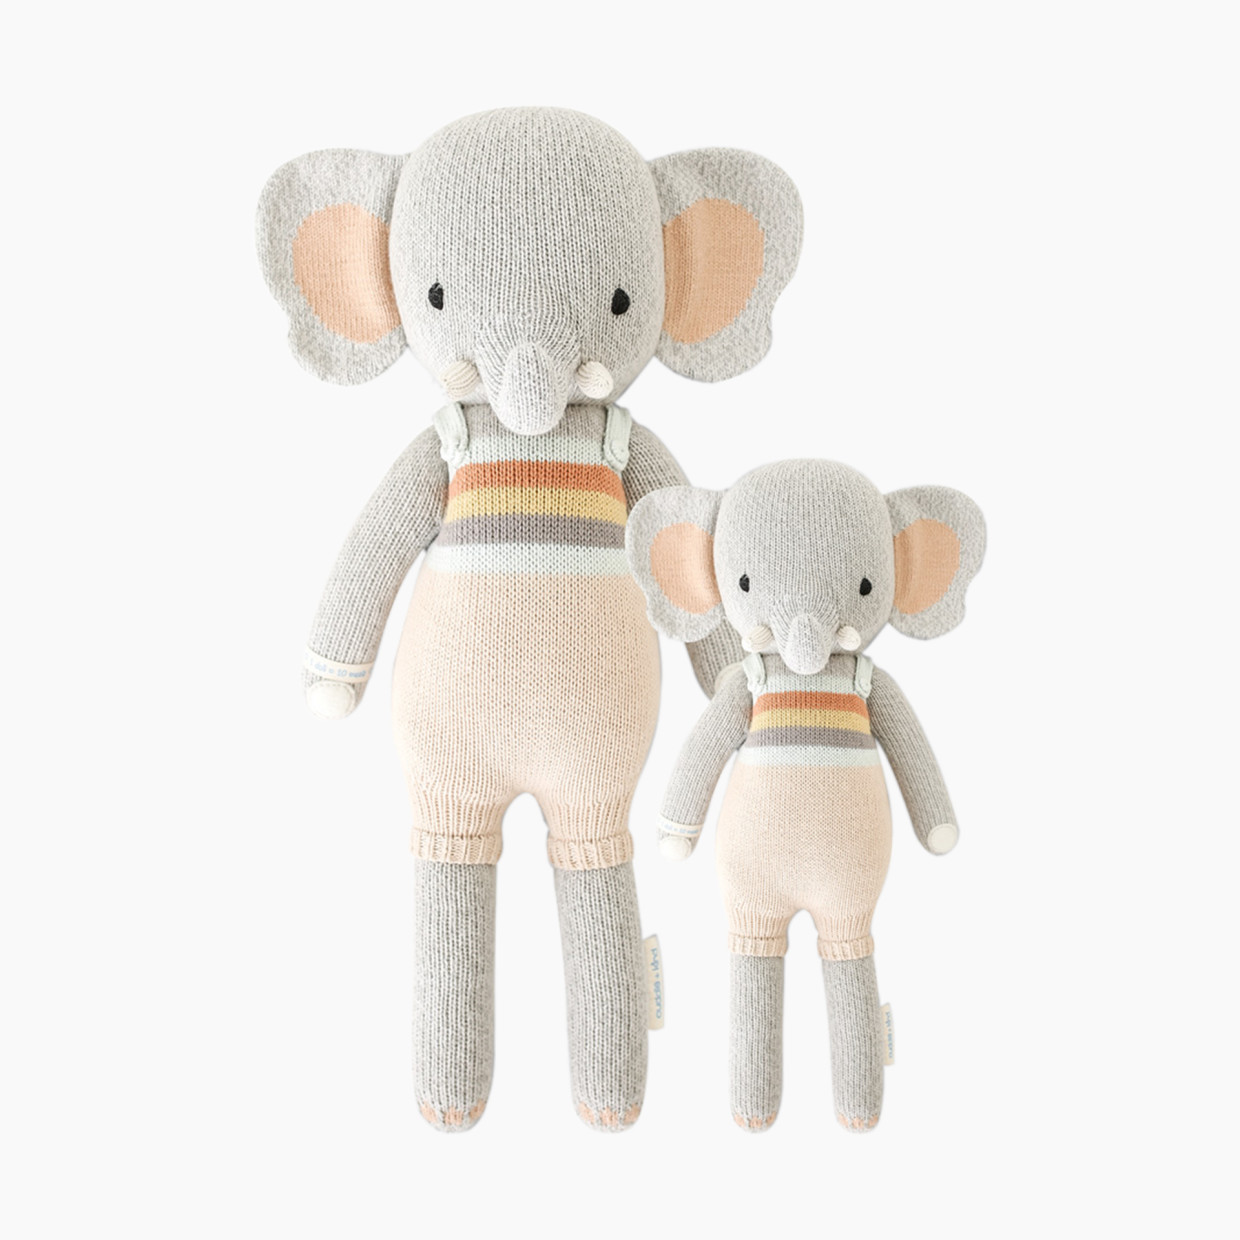 cuddle+kind Hand-Knit Doll - Evan The Elephant, Little 13".